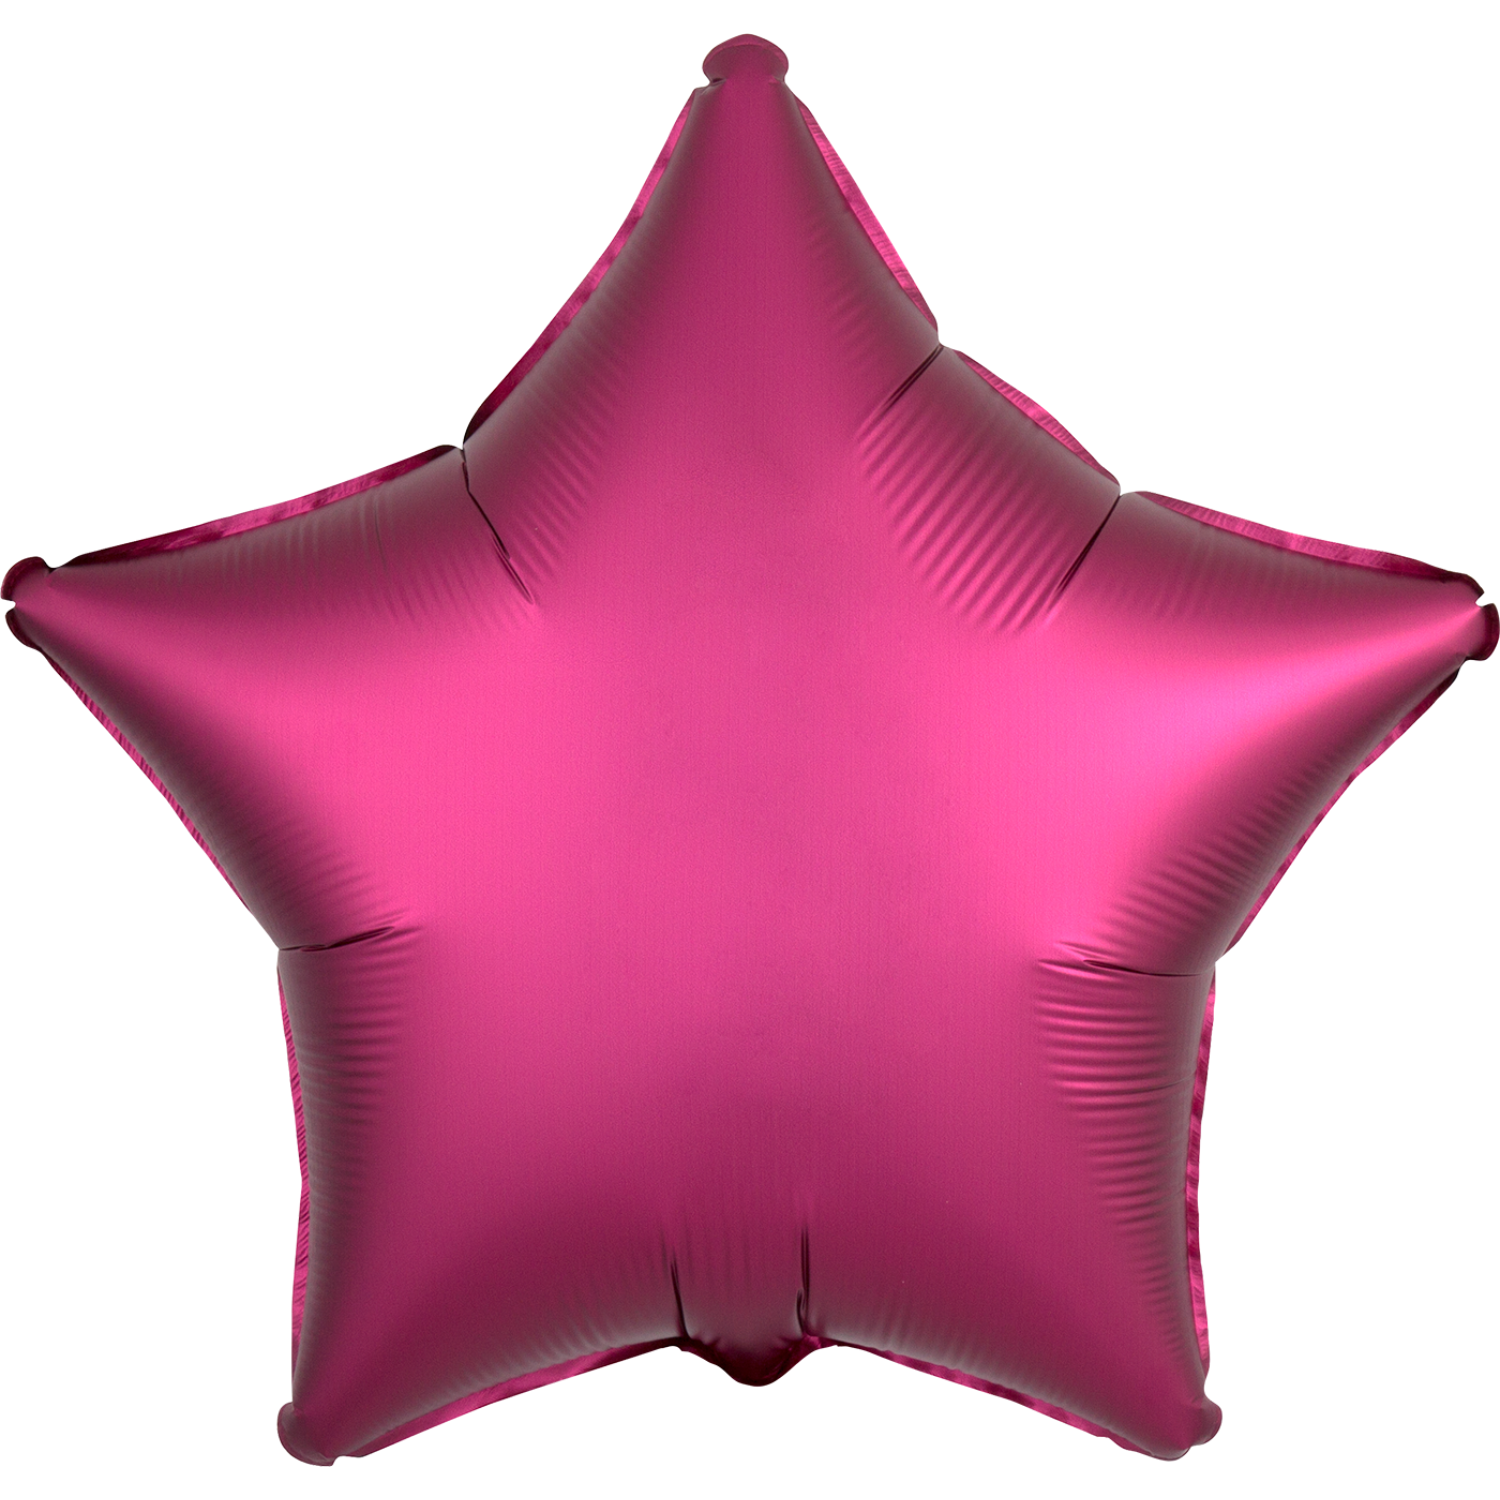 http://images.officebrain.com/migration-api-hidden-new/web/images/626/myrn-star-pomegranate-pink.png